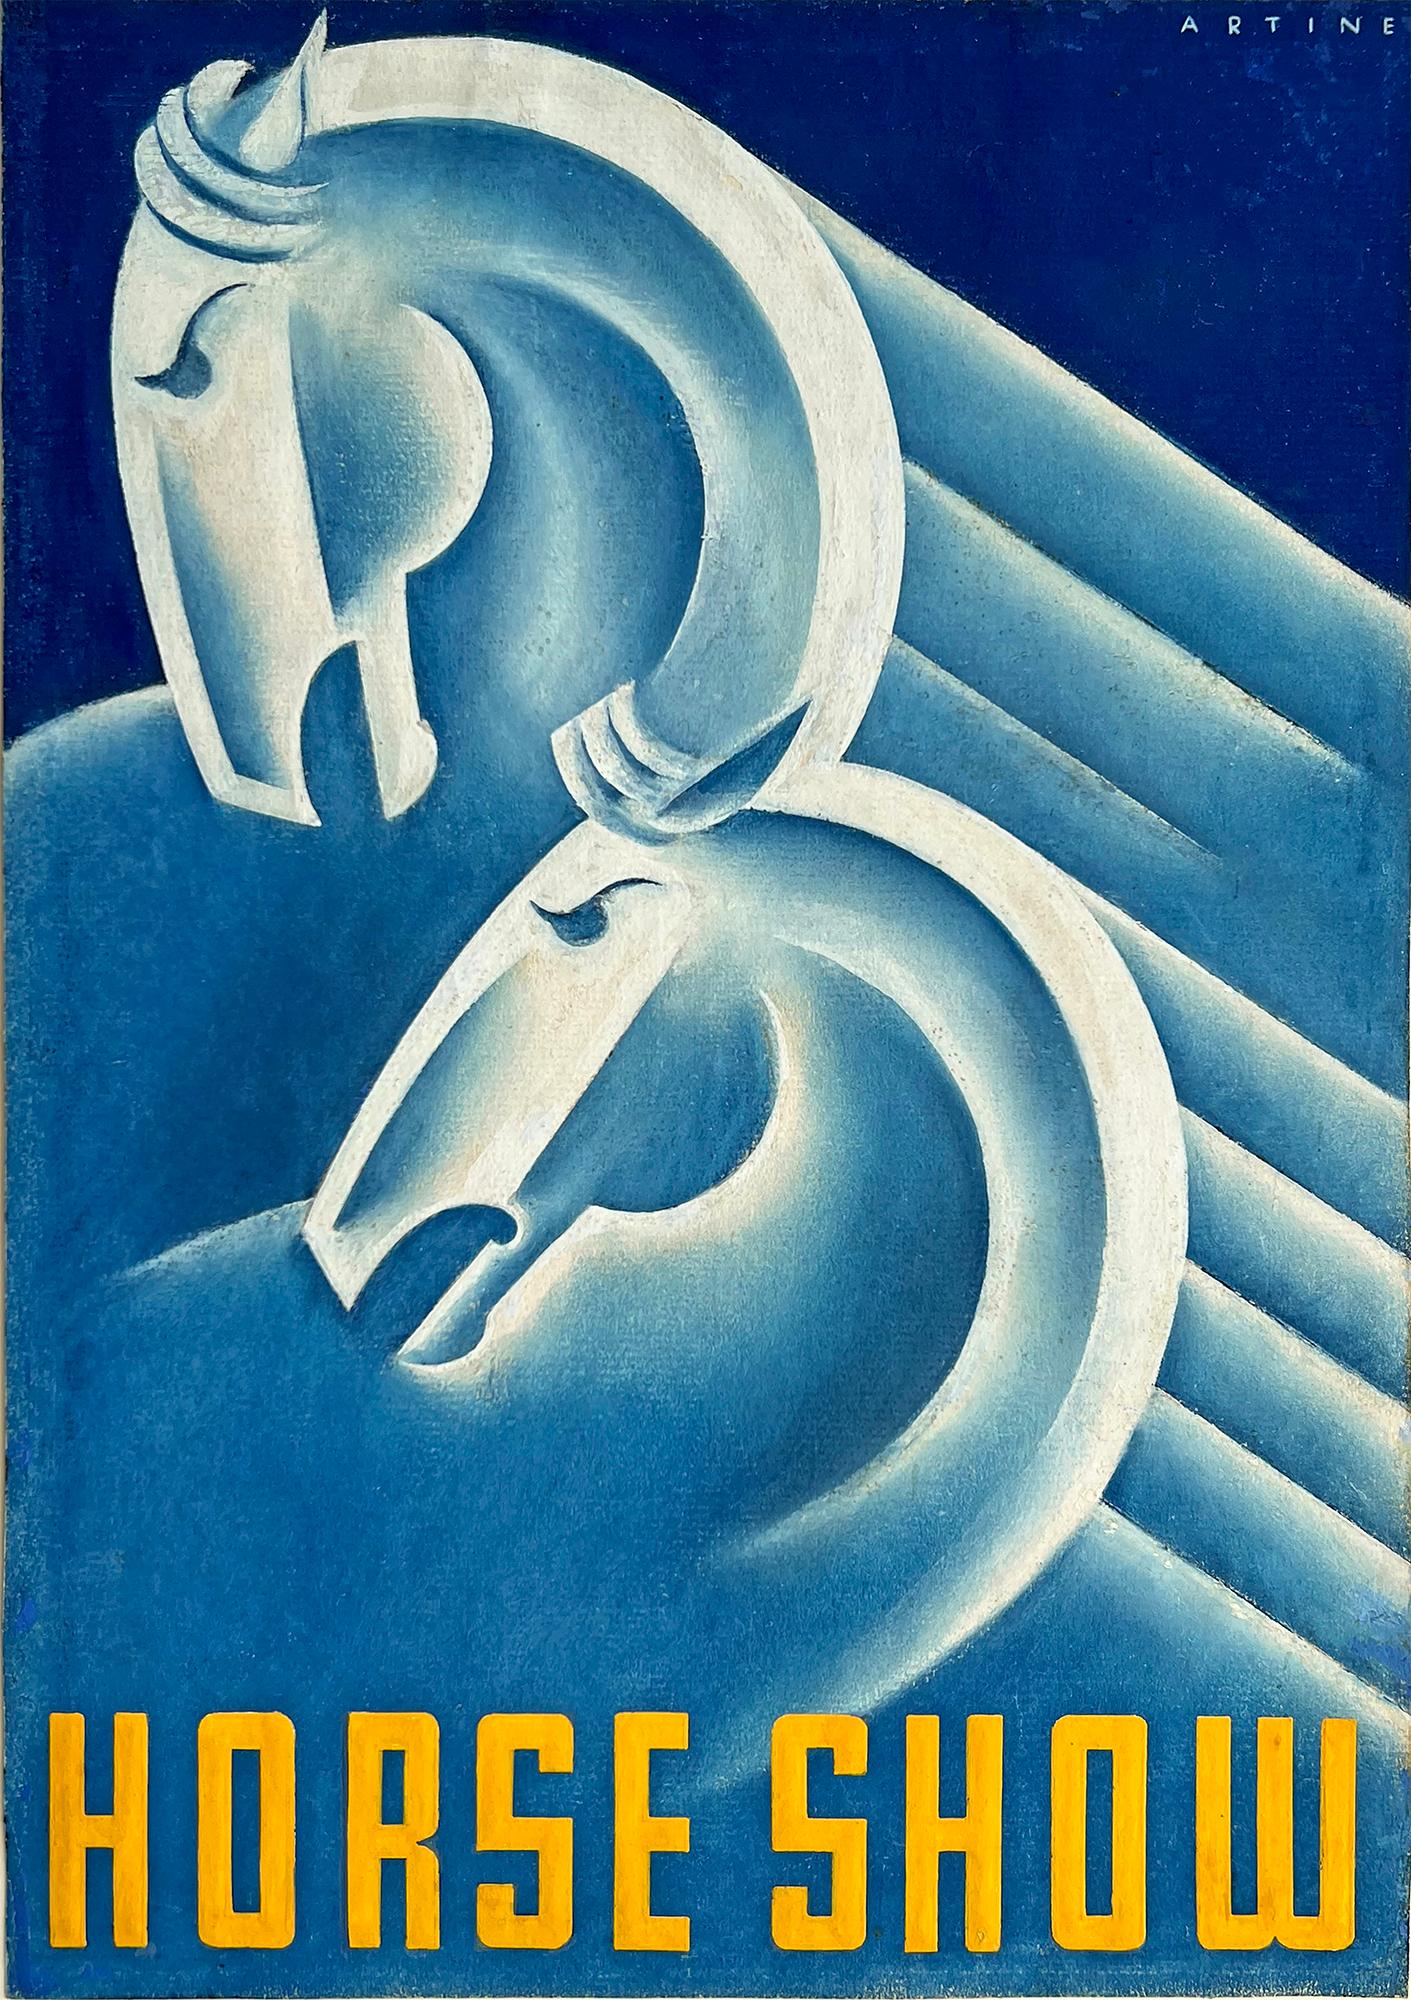 Robin Artine Smith Animal Painting - Art Deco Horses in Blue - Horse Show Illustration by Female Illustrator 